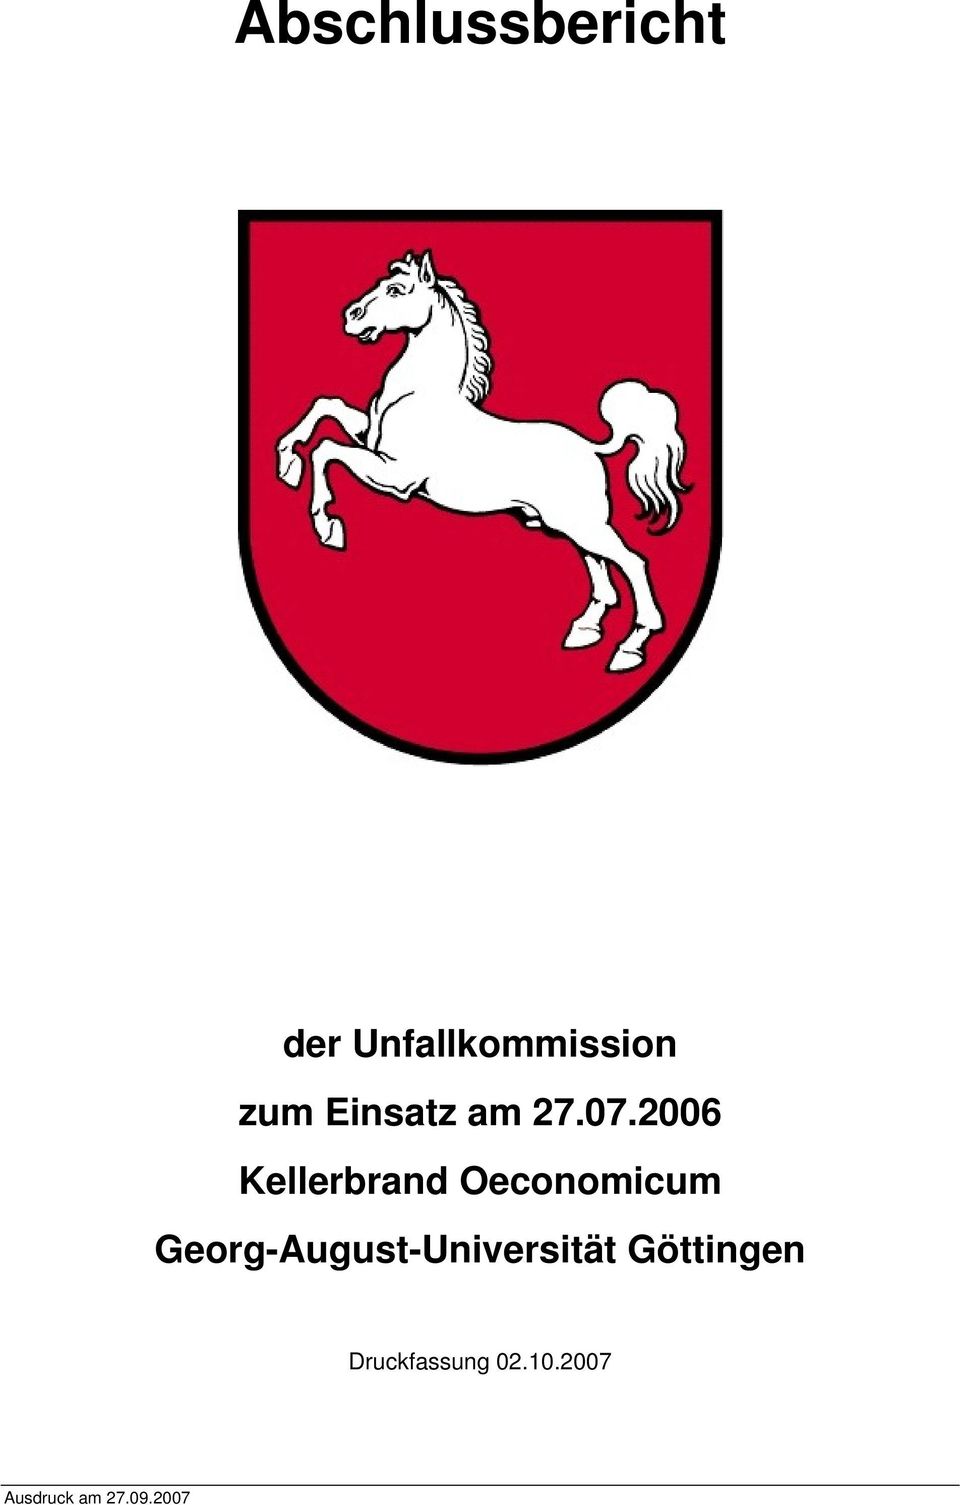 2006 Kellerbrand Oeconomicum